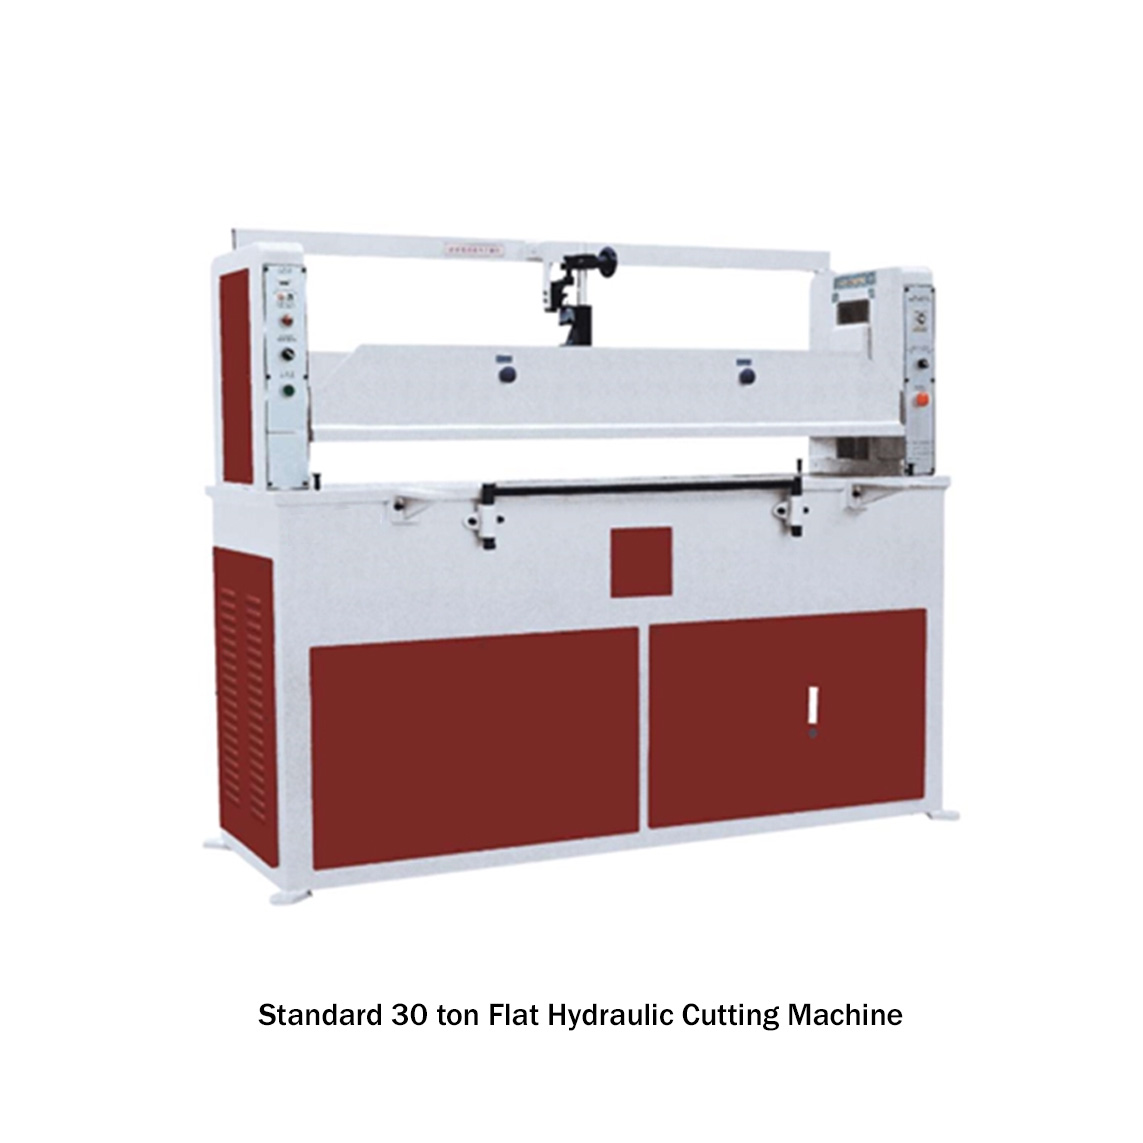 Standard 30 ton Flat Hydraulic Cutting Machine